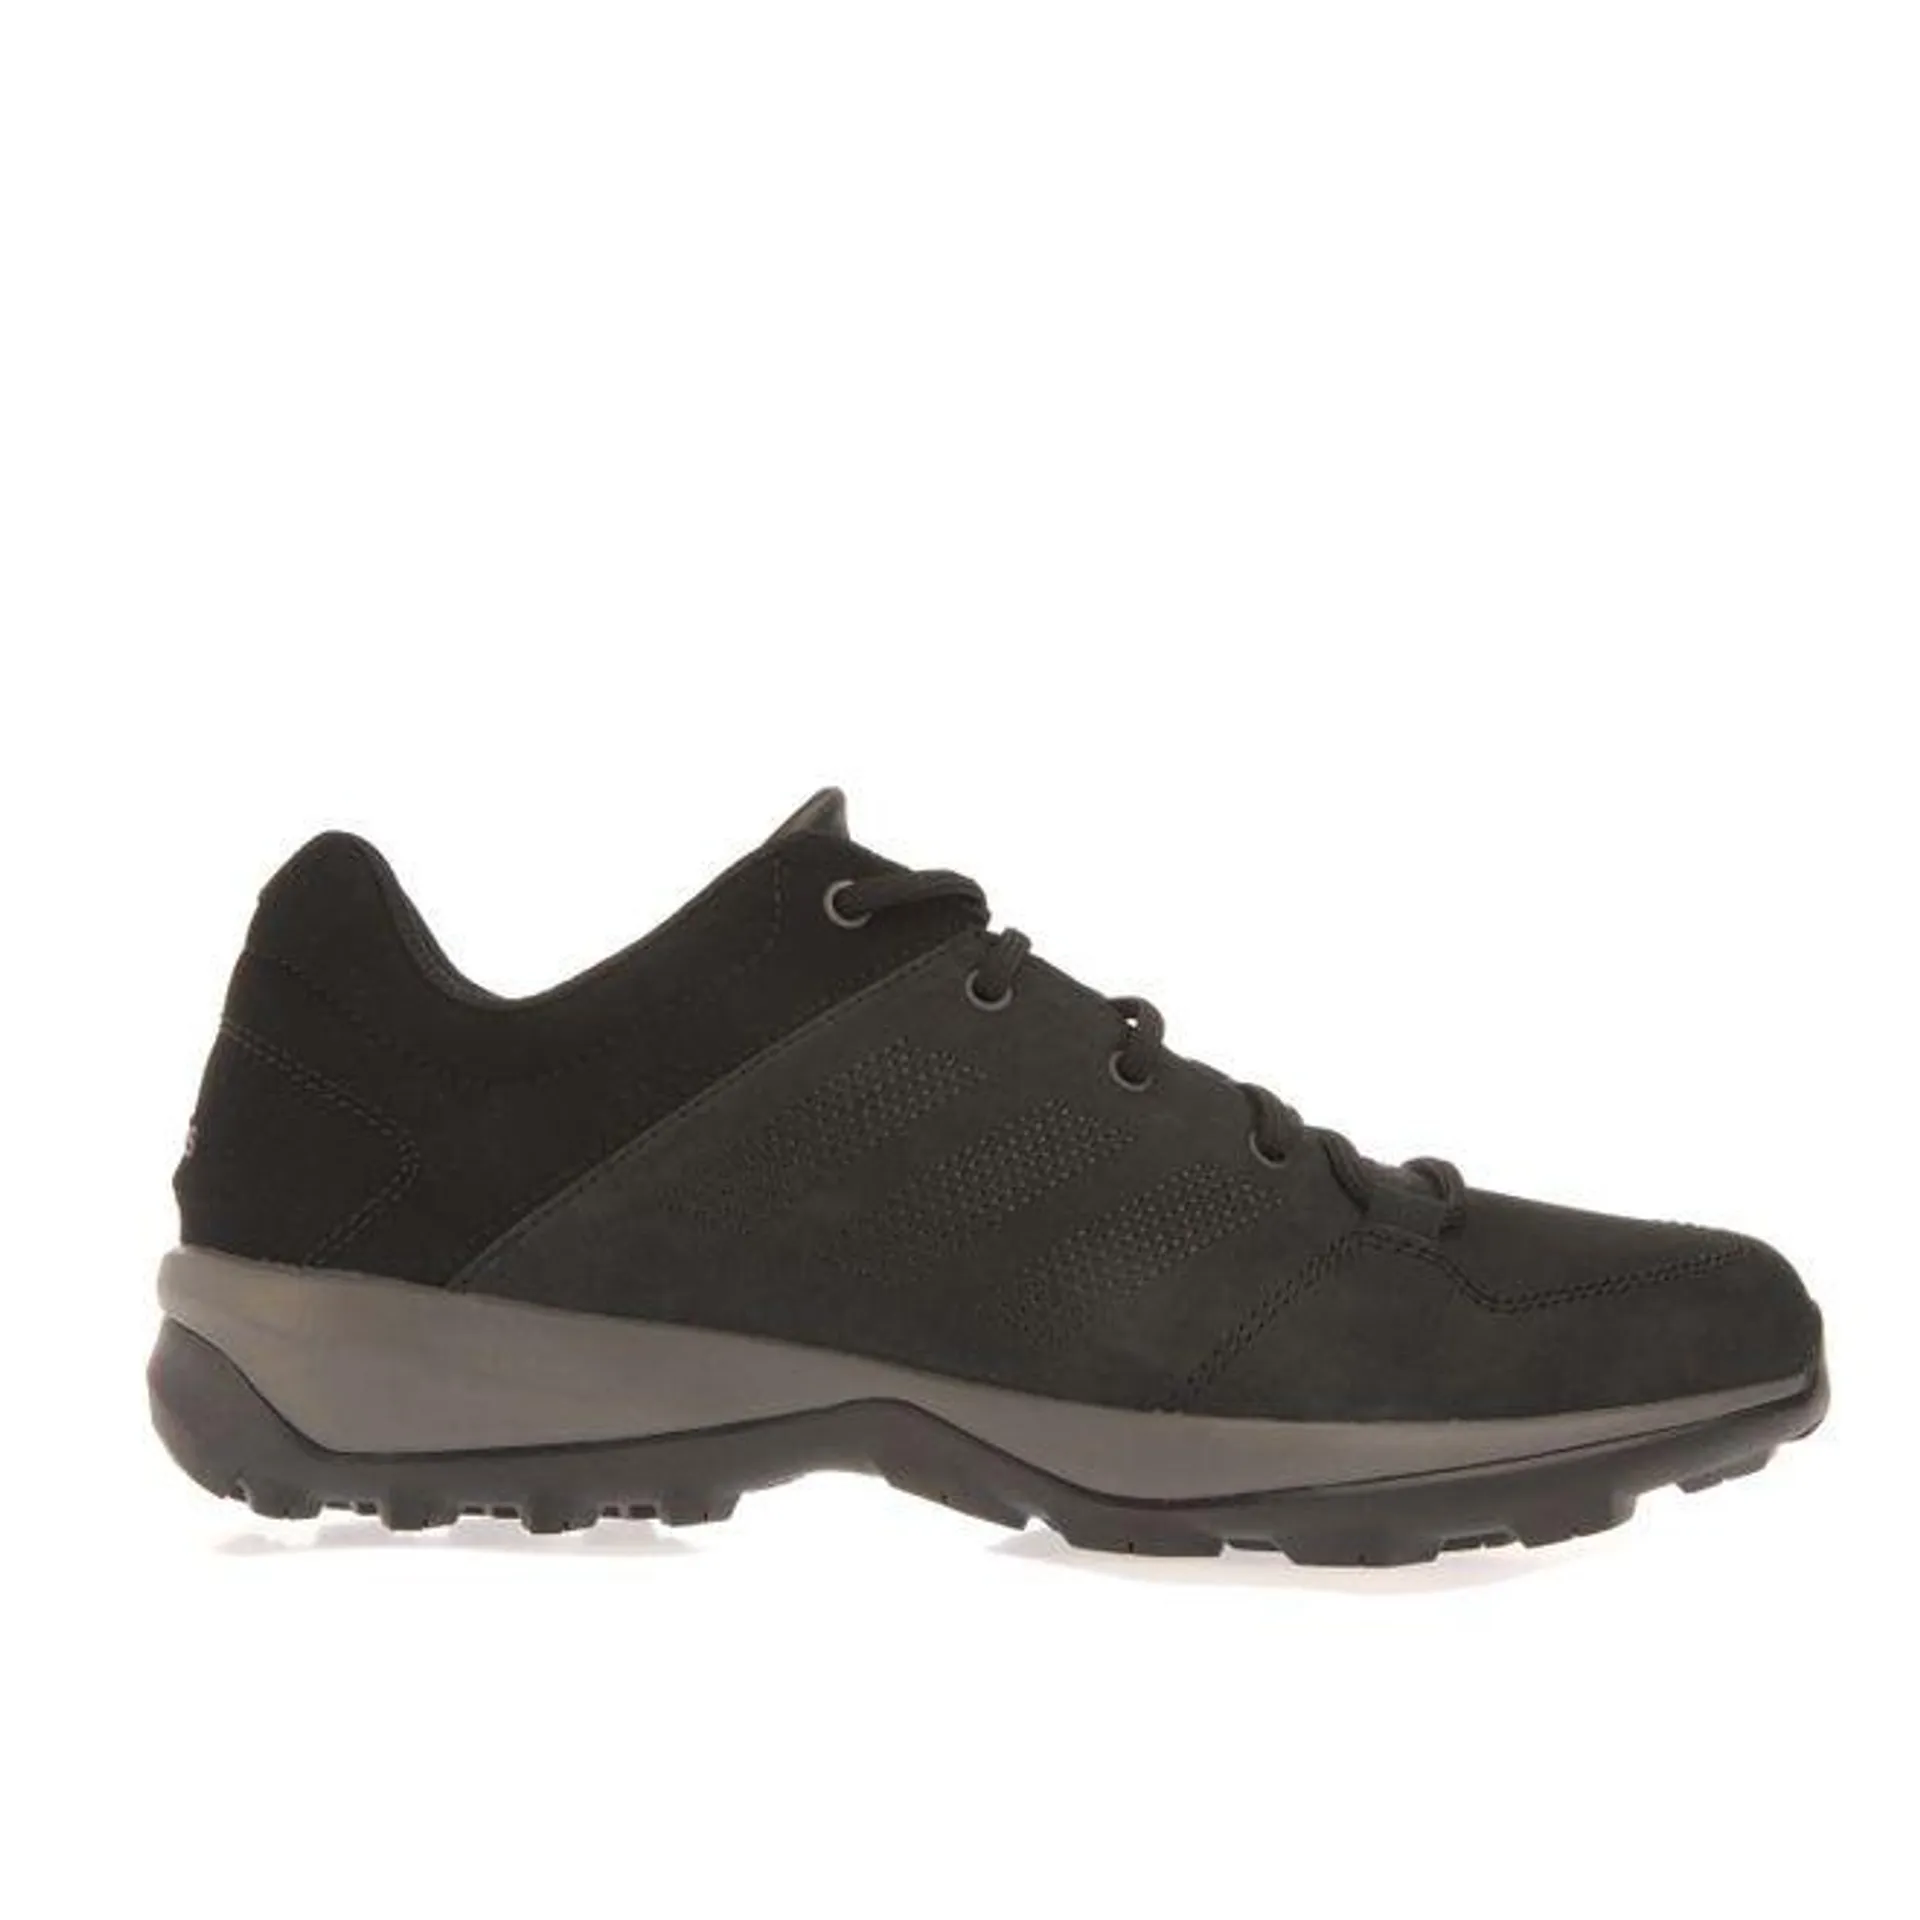 adidas Mens Daroga Plus Leather Hiking Trainers in Black